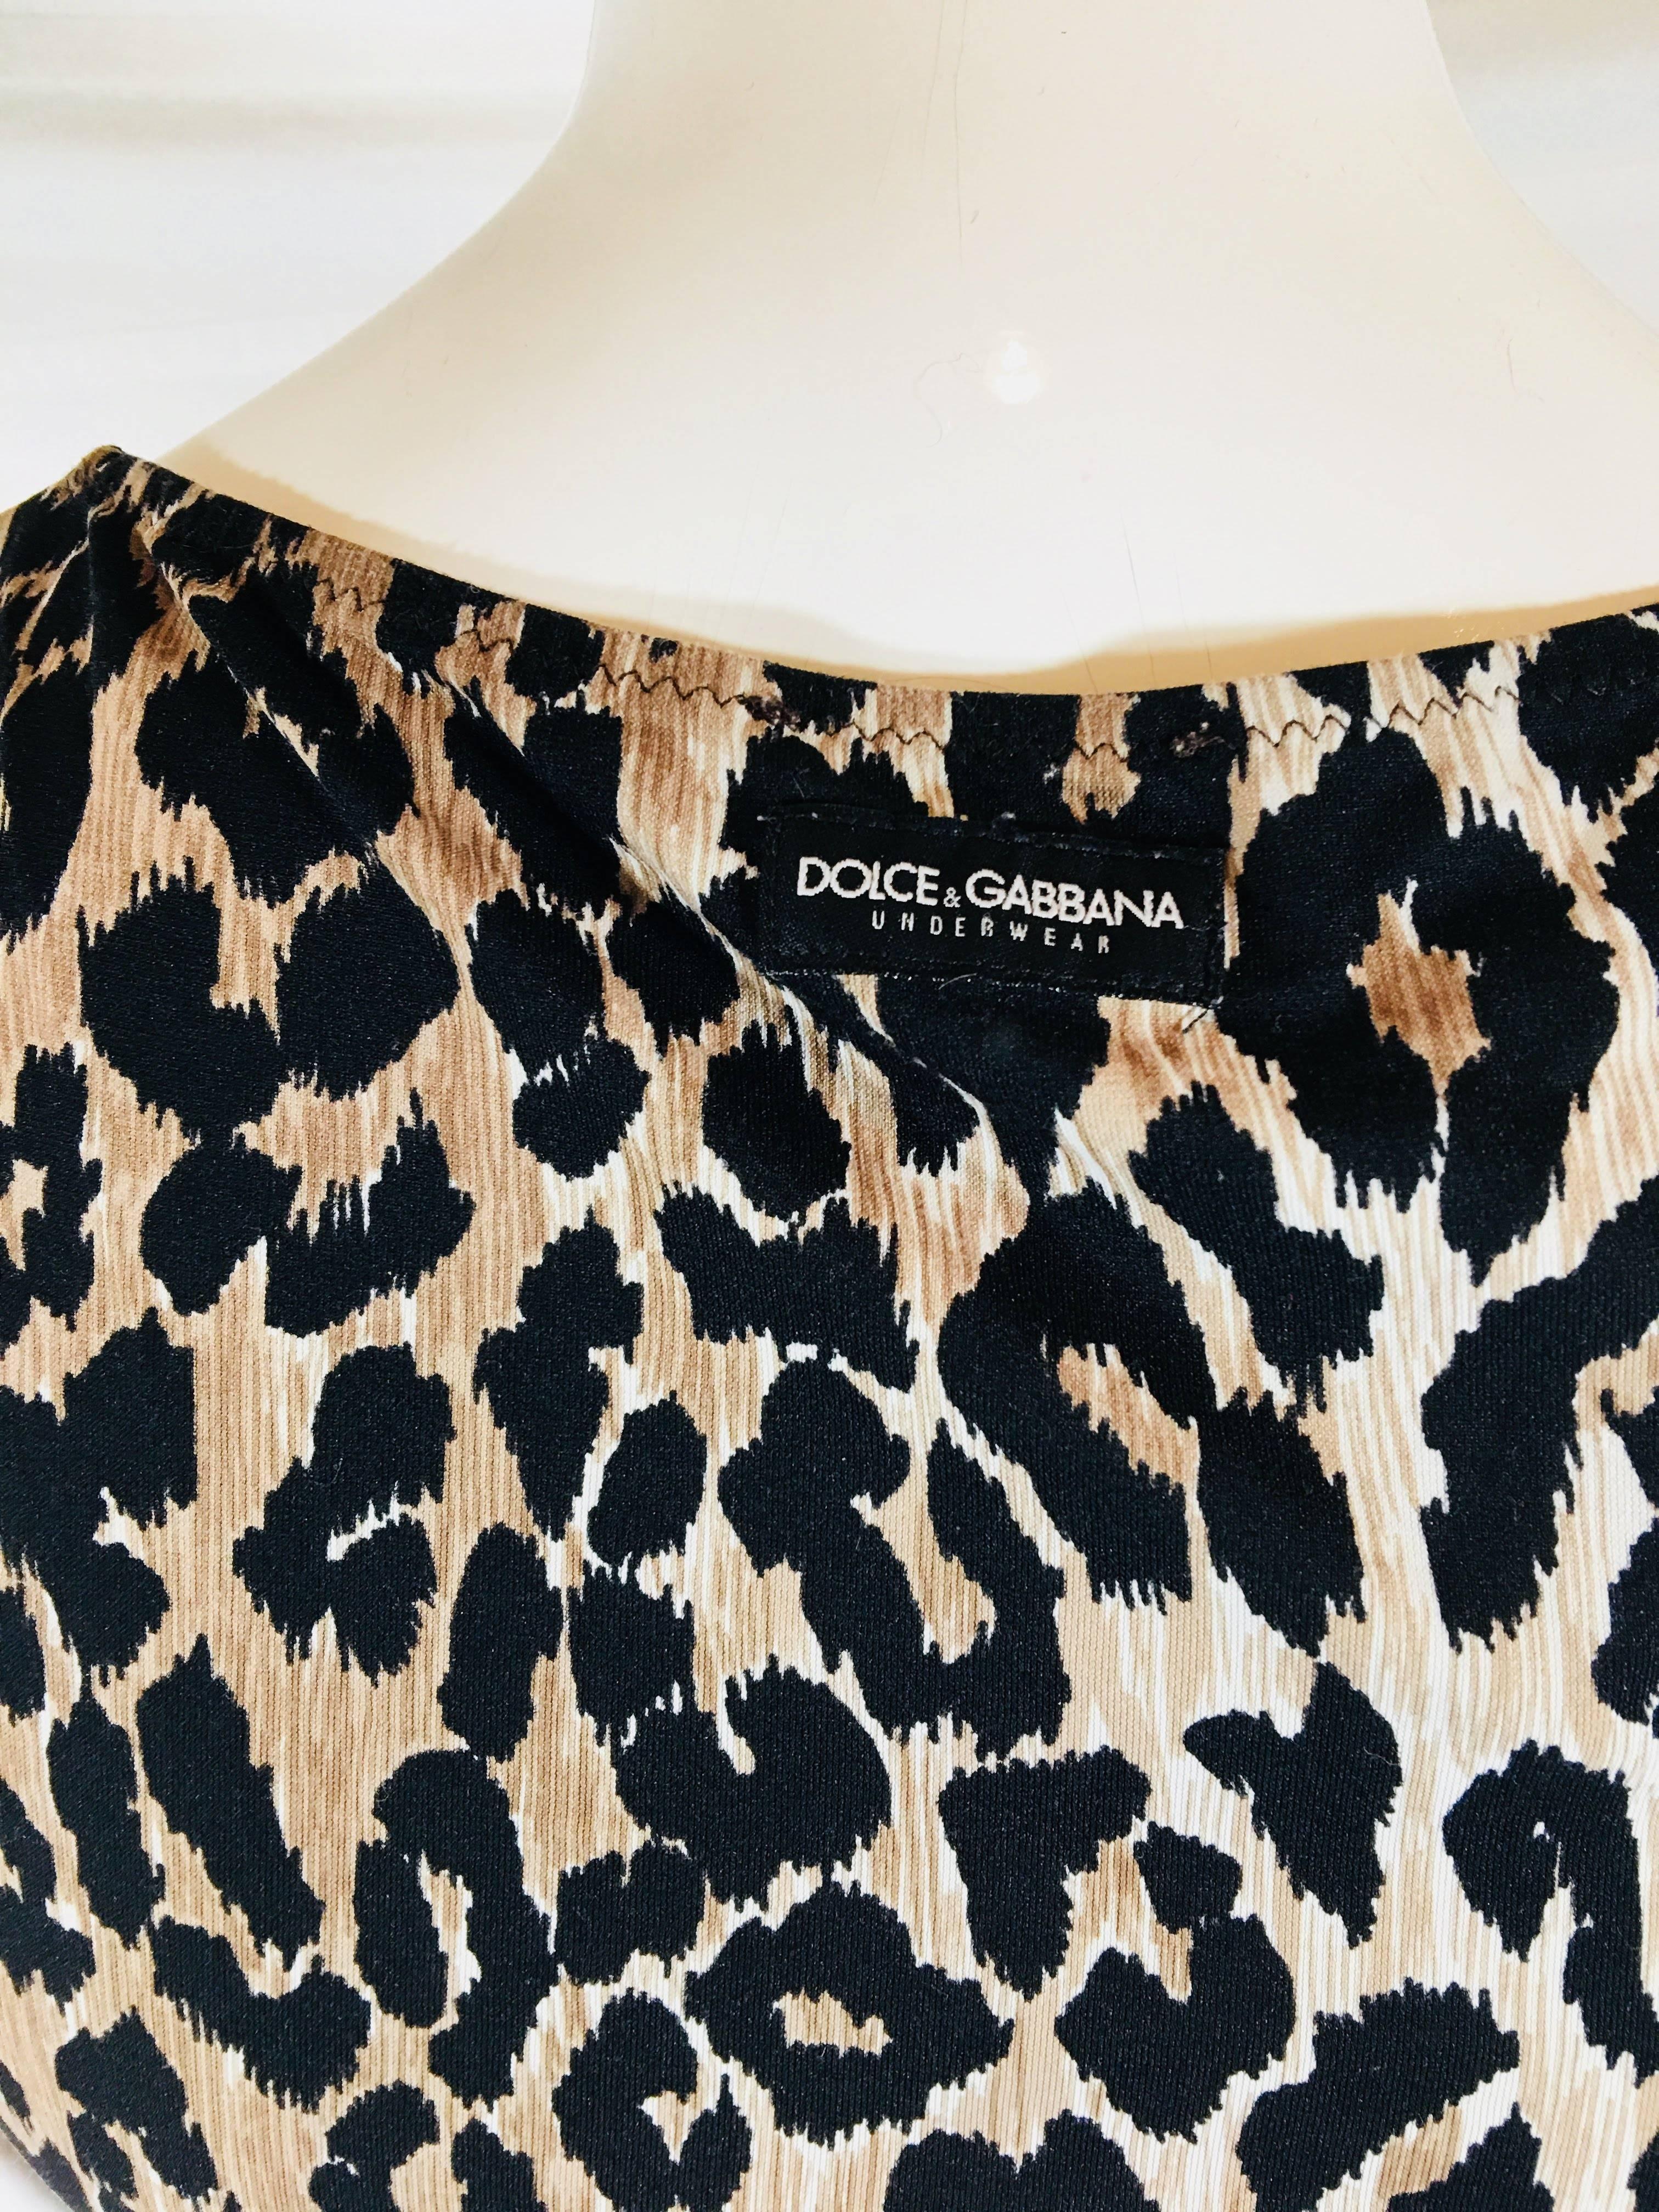 Dolce & Gabbana Cheetah Print Top 2